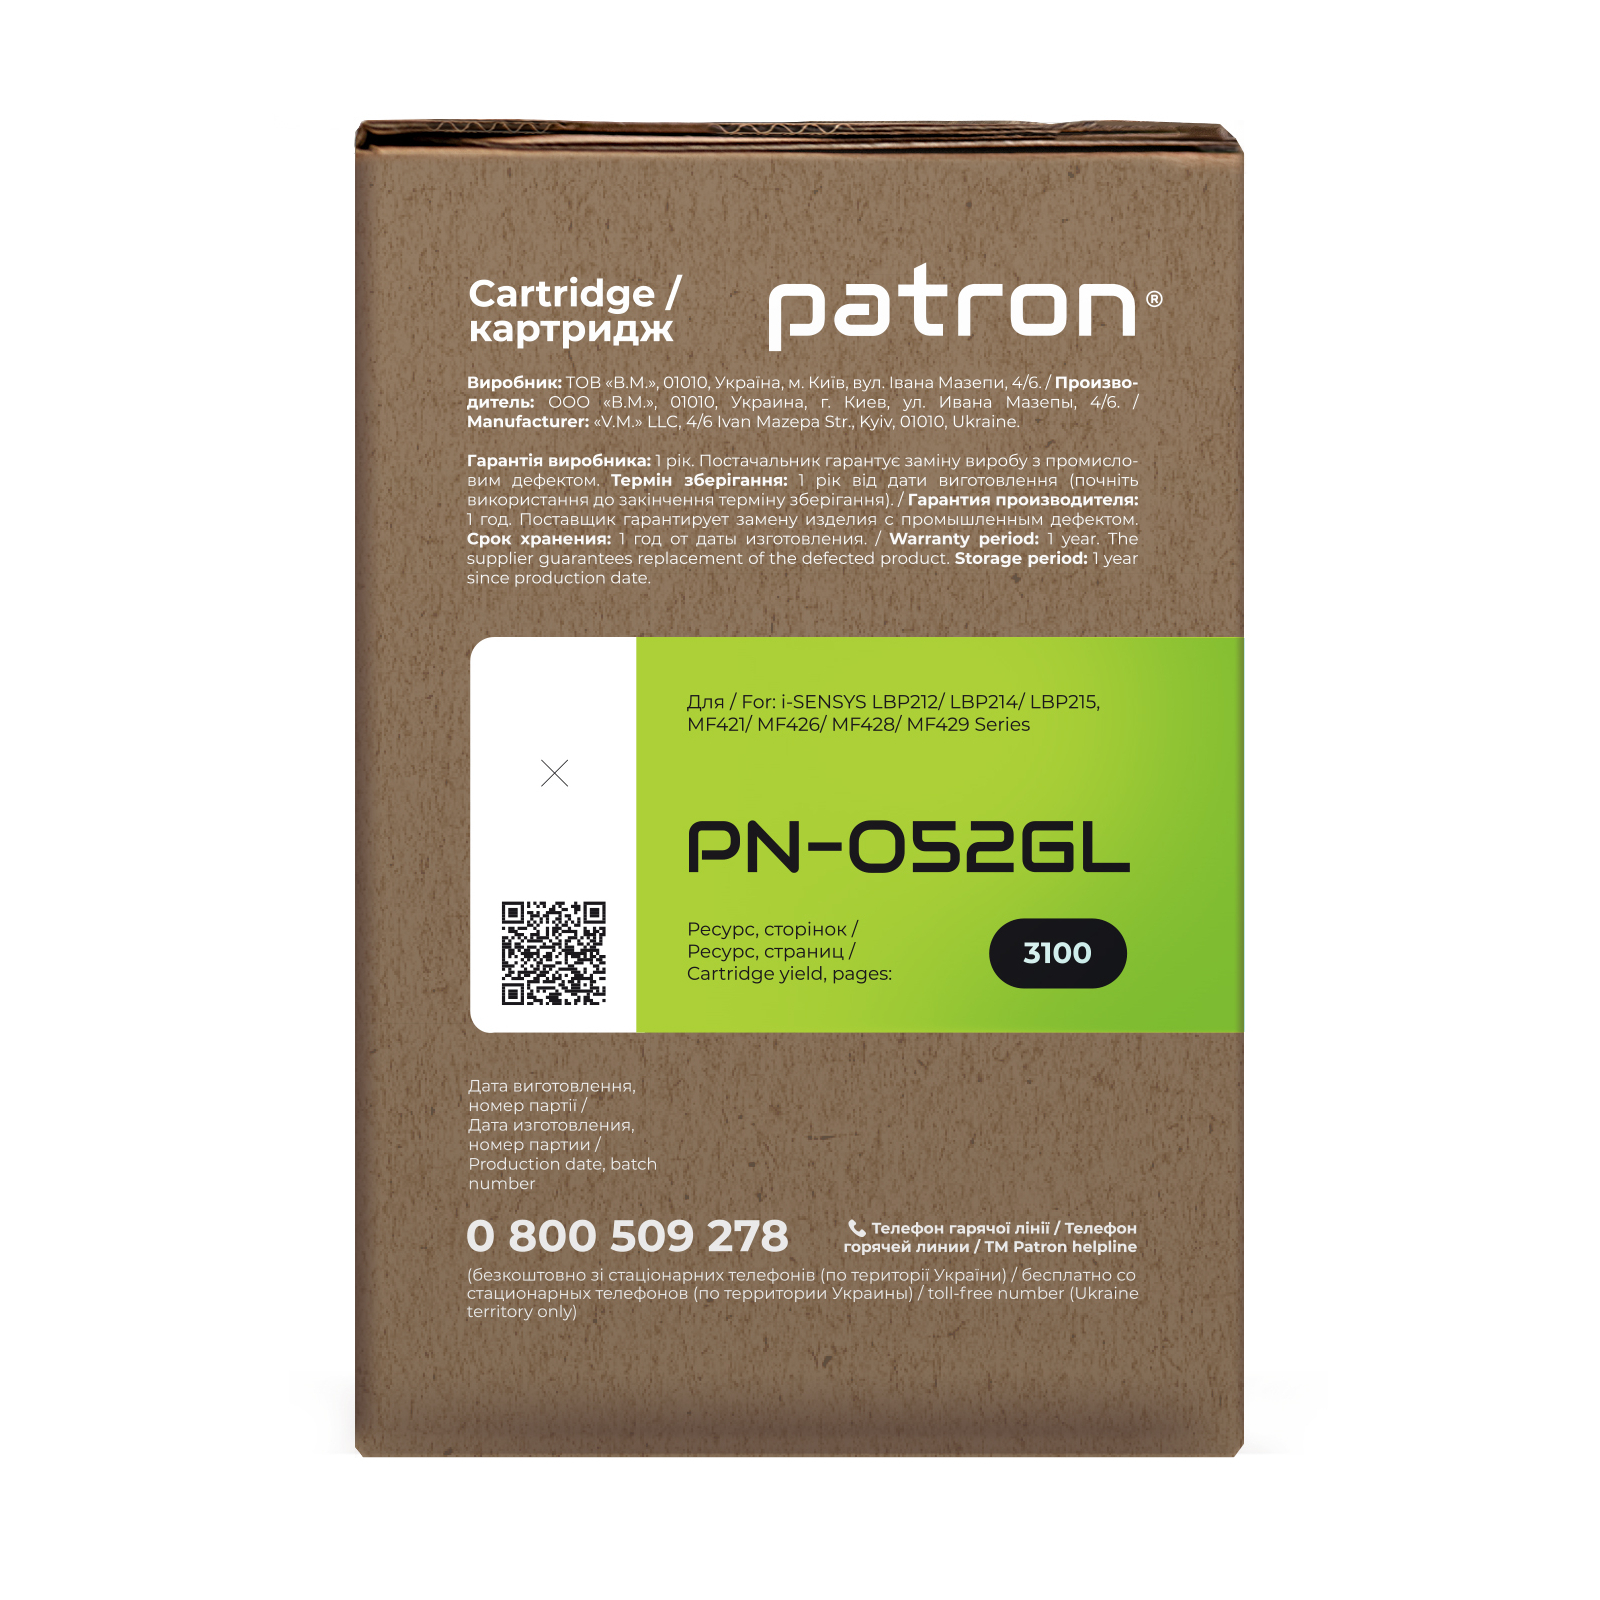 Картридж Patron CANON 052 GREEN Label (PN-052GL) изображение 3